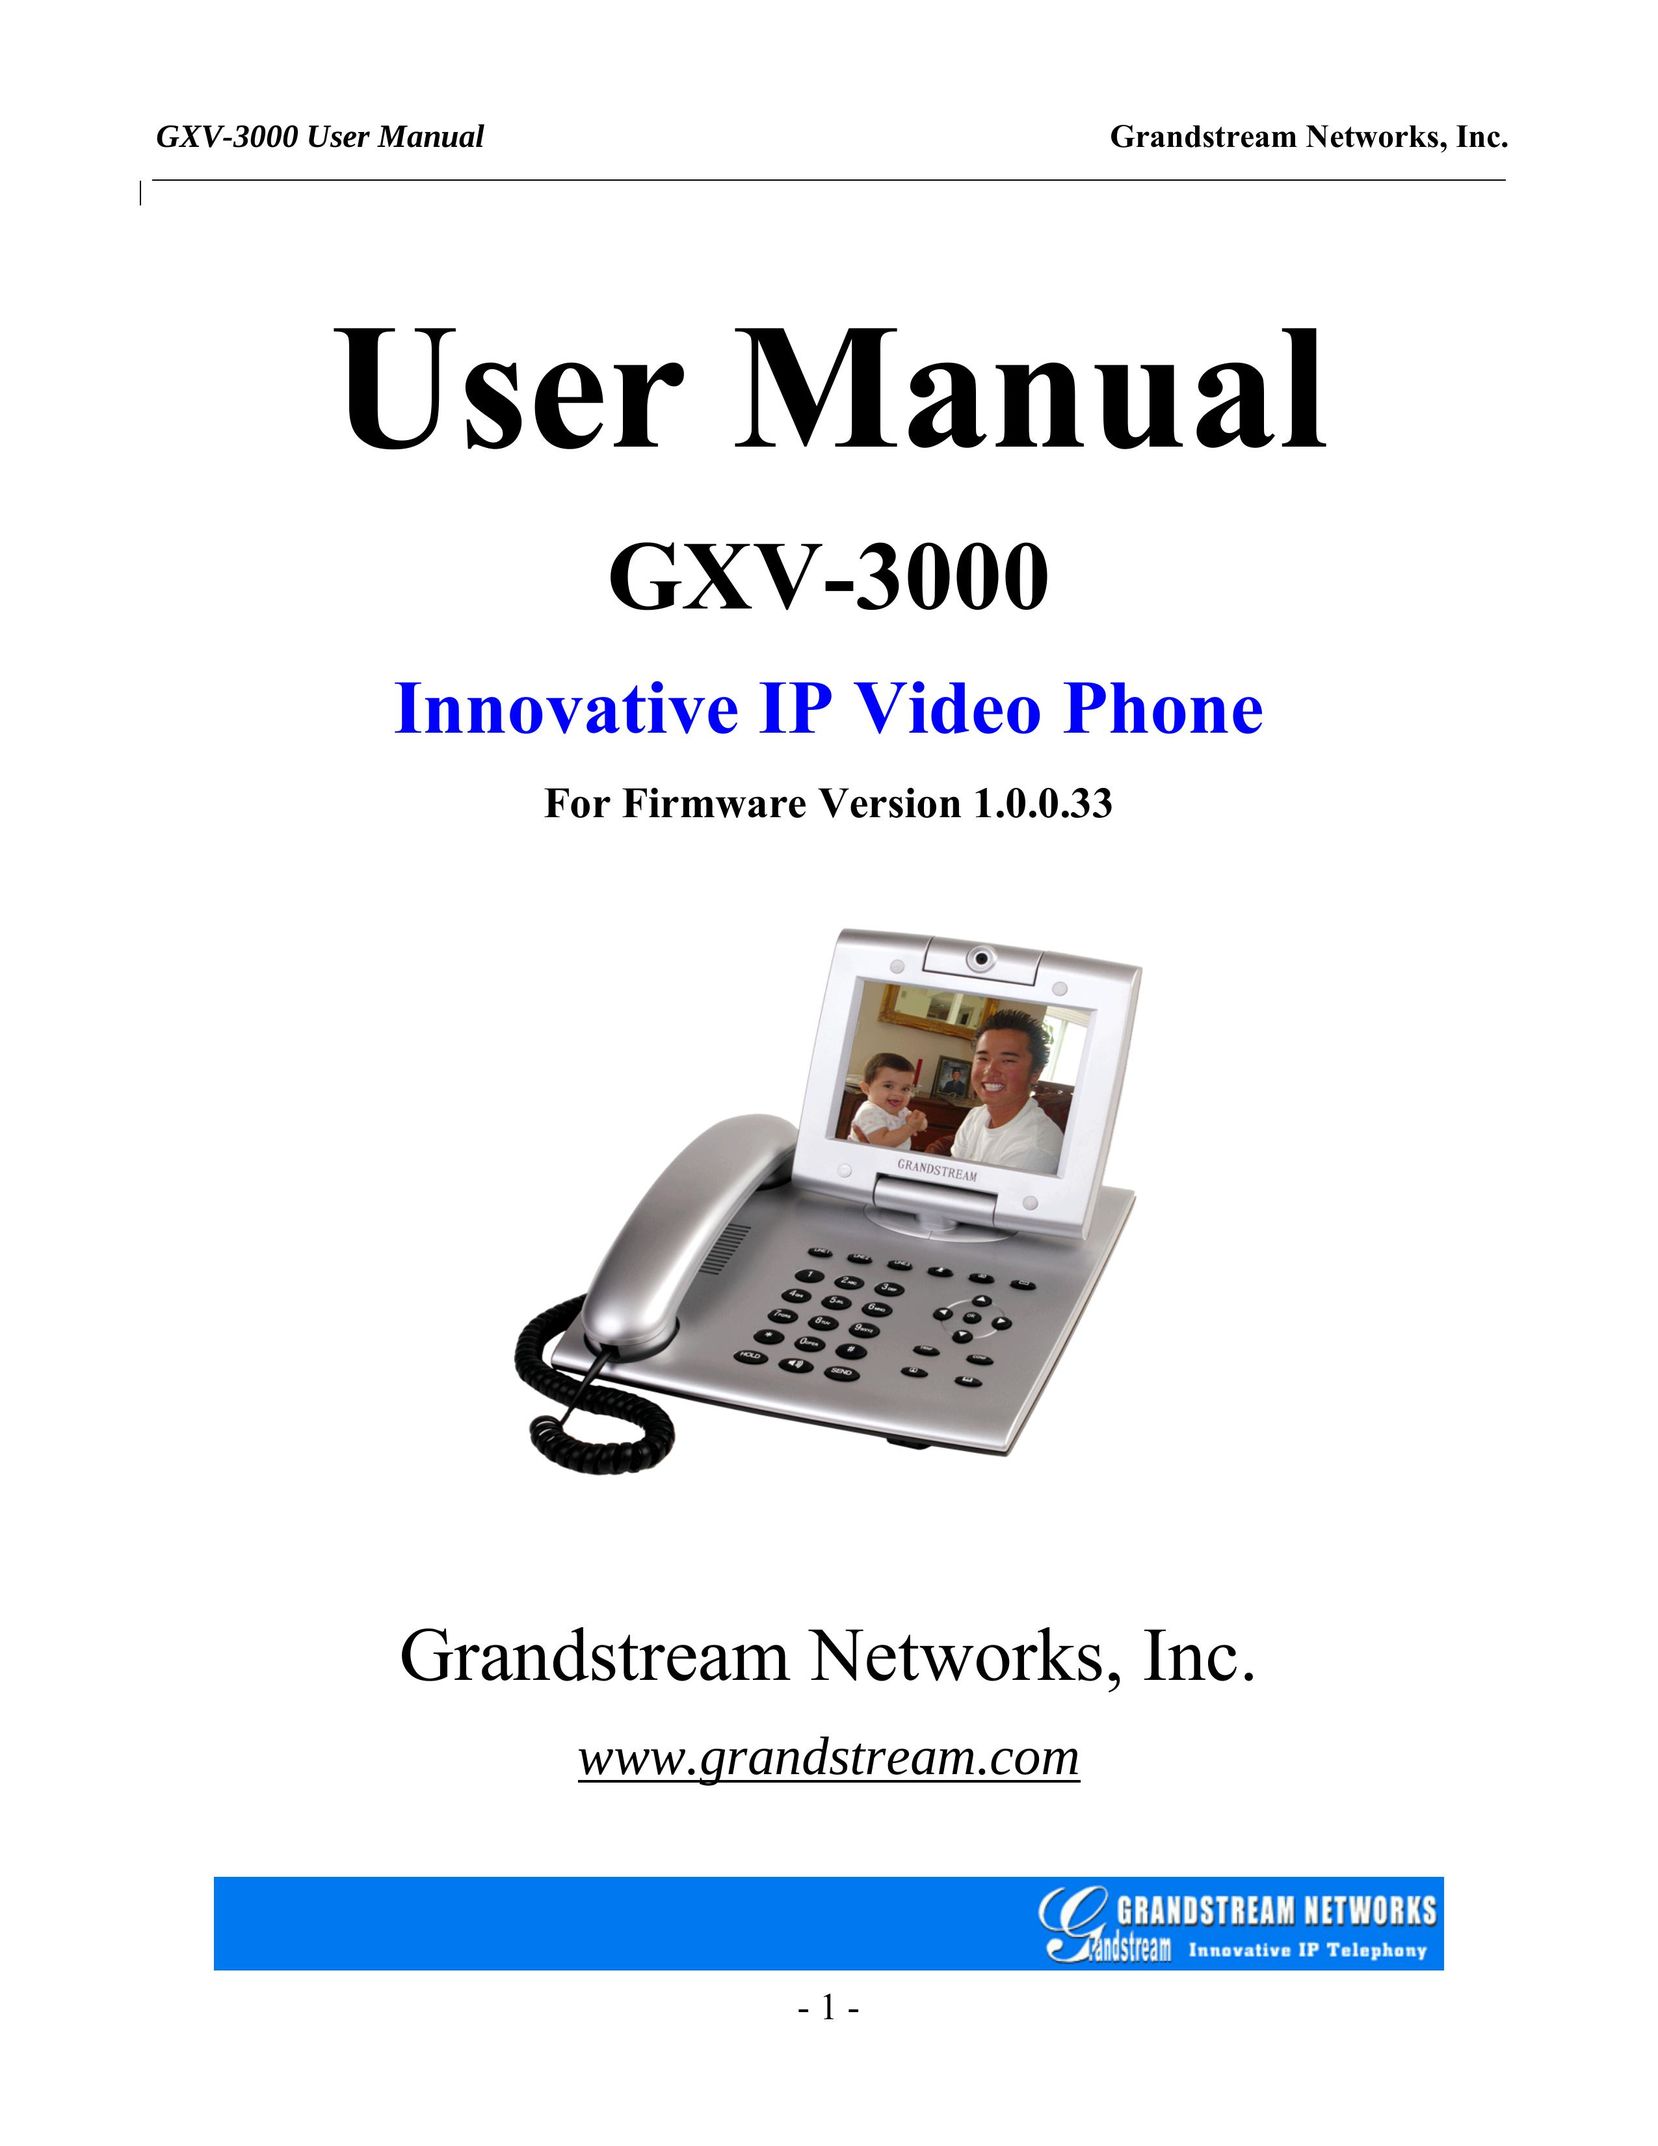 Grandstream Networks GXV-3000 Telephone User Manual